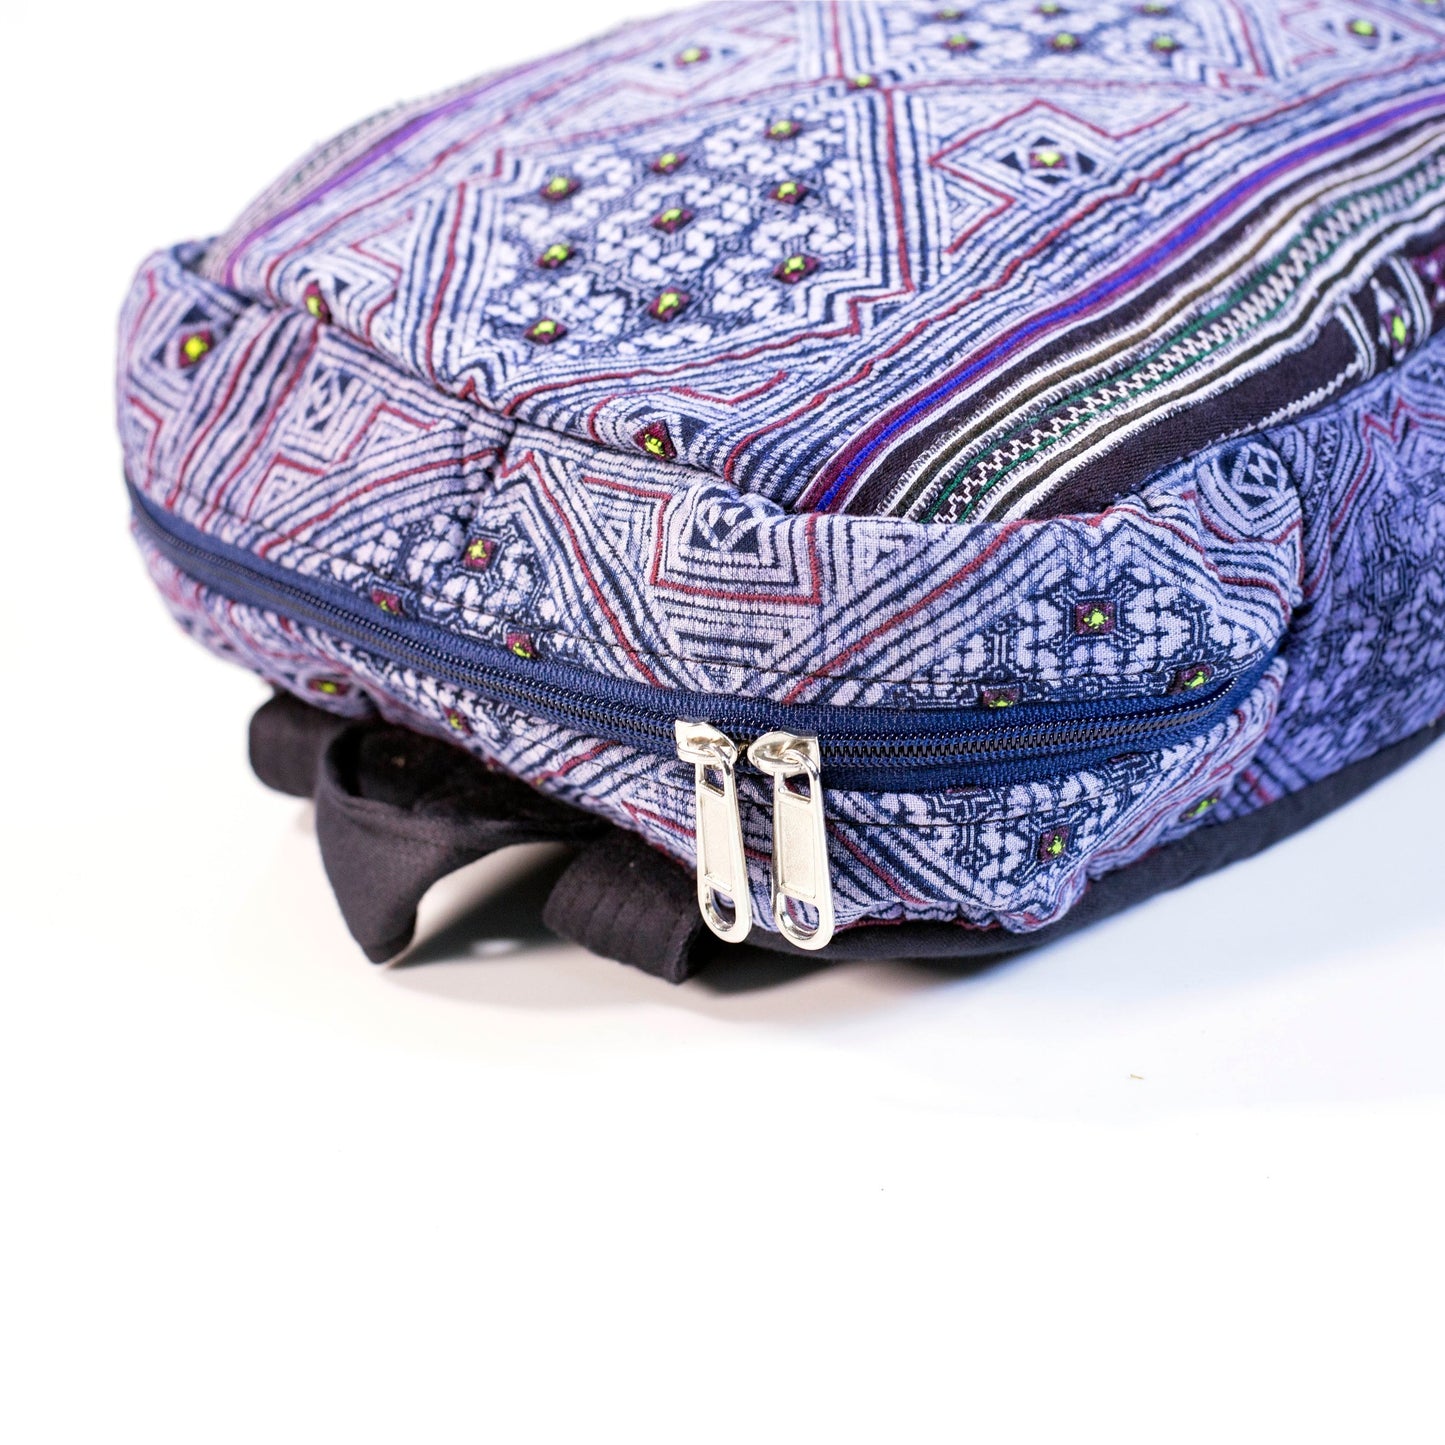 Batik backpack, medium size in a unique design, tribal pattern